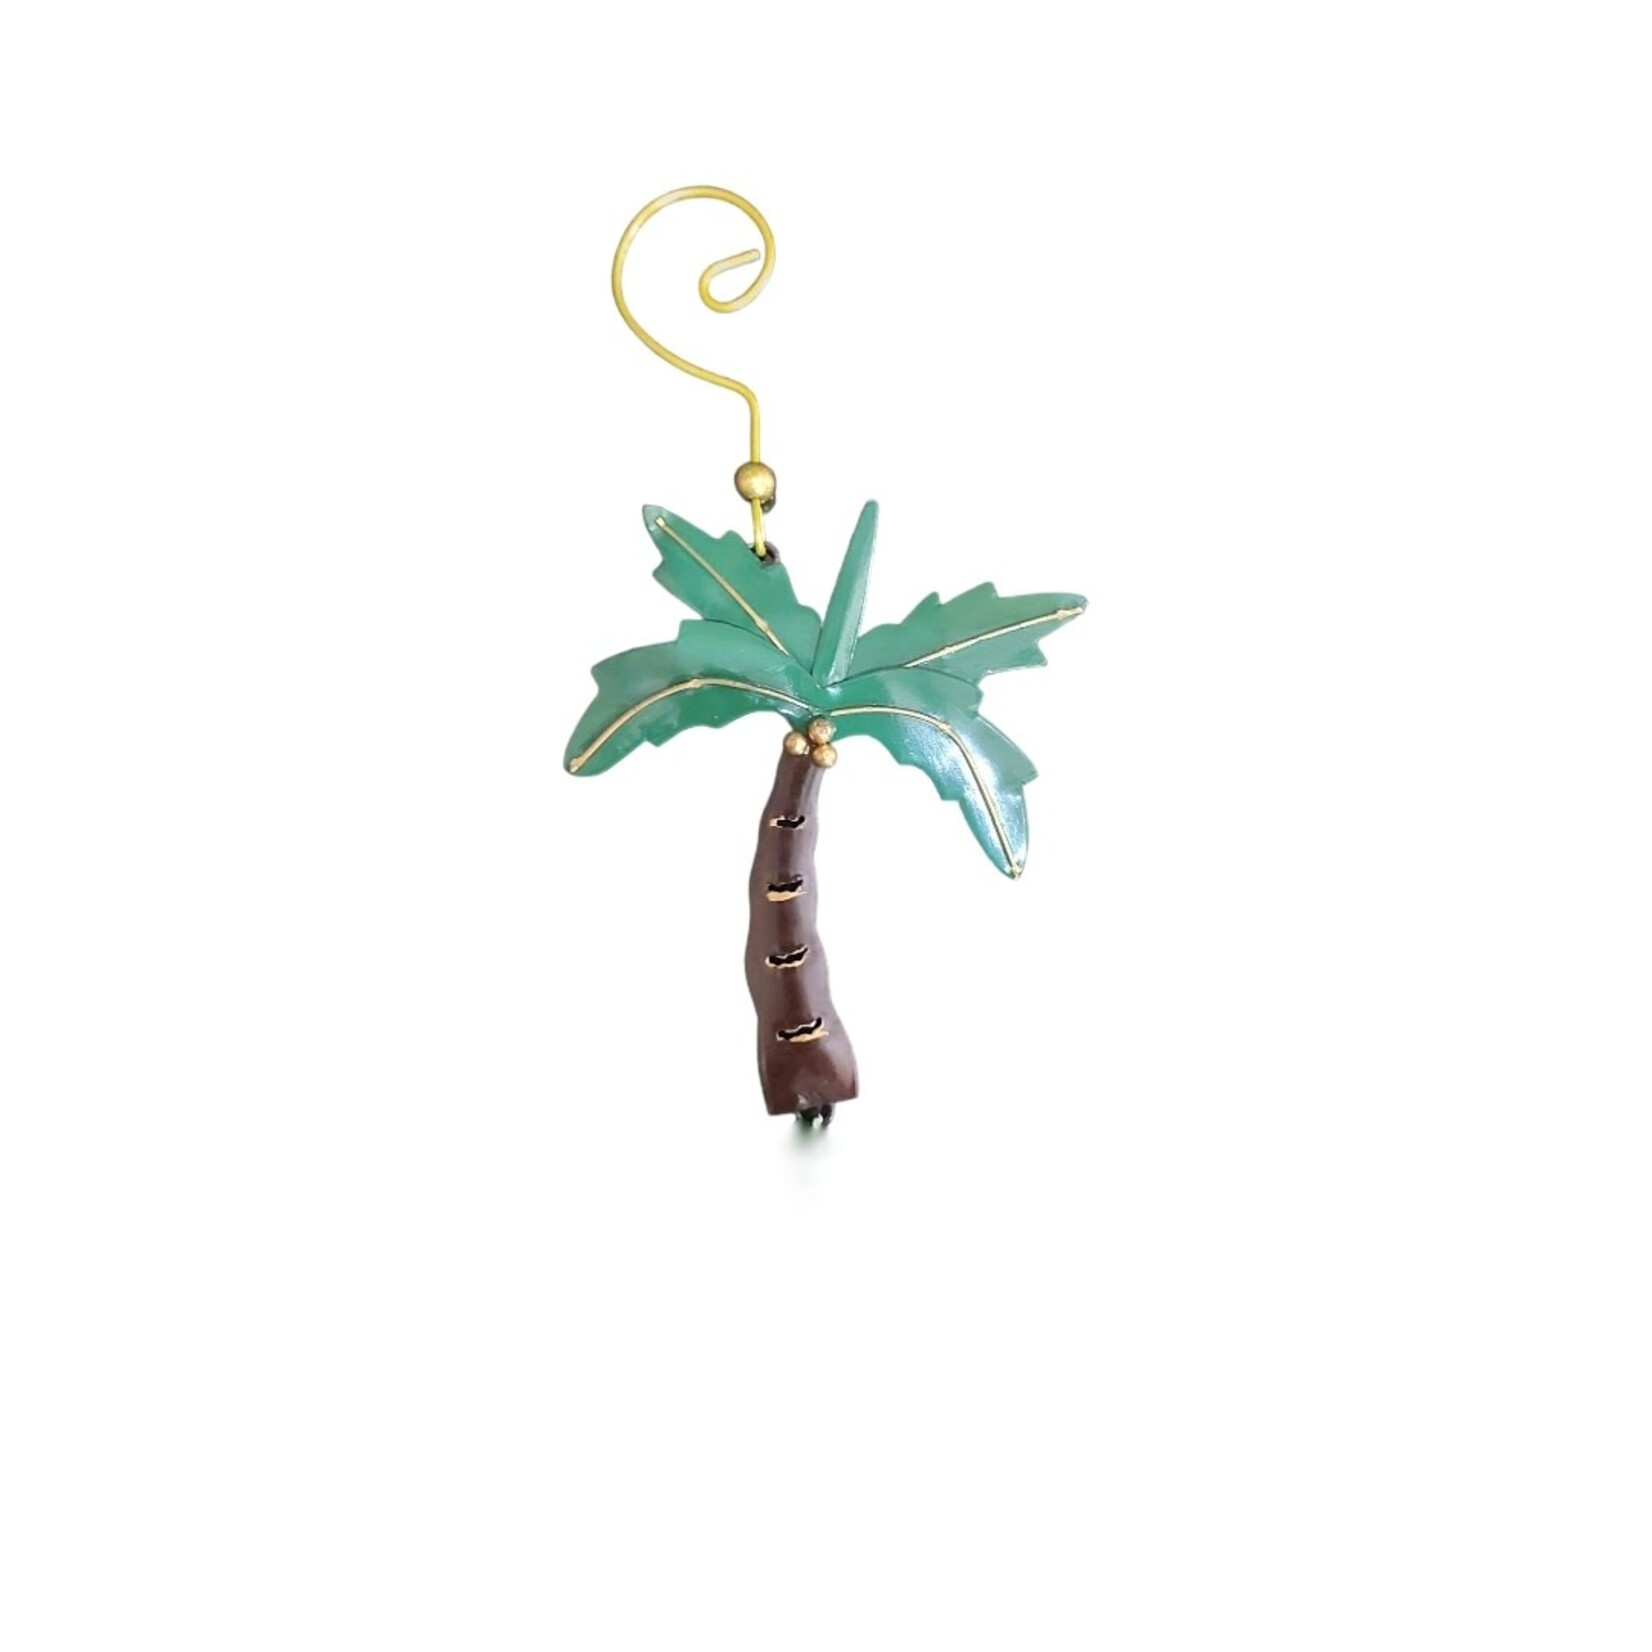 Hand Made Palm Tree Ornament